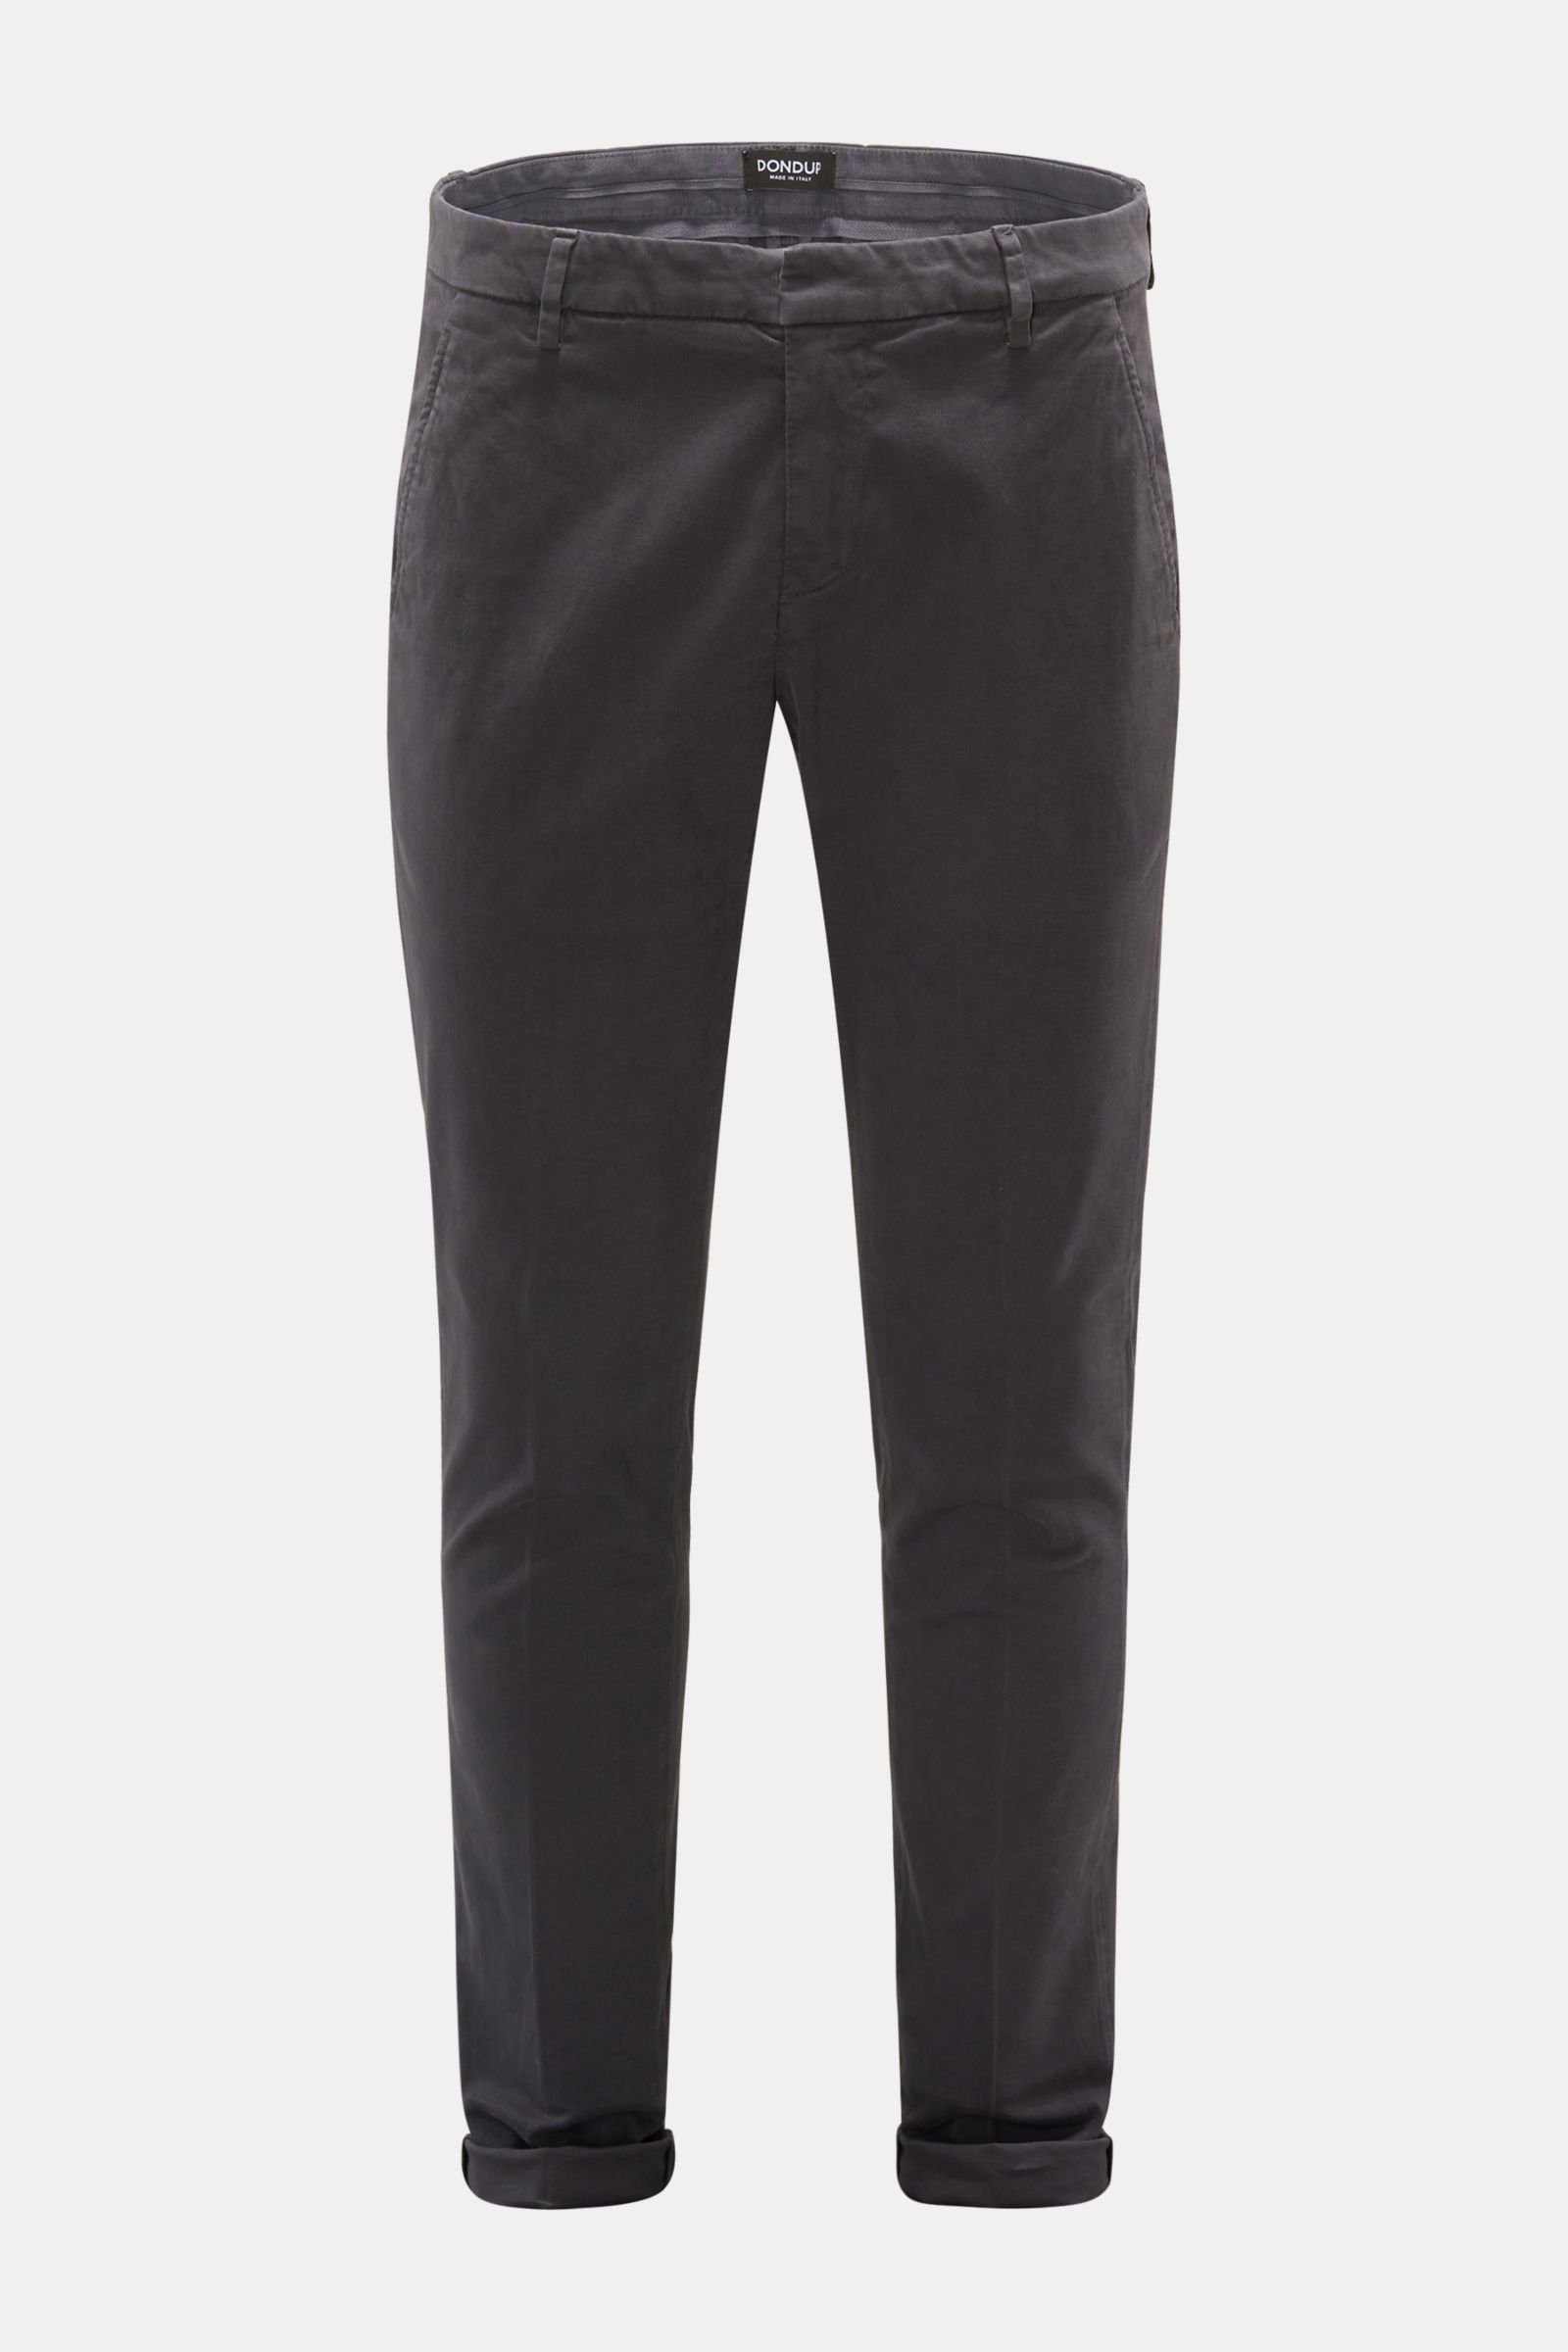 Fustian trousers 'Gaubert' dark grey